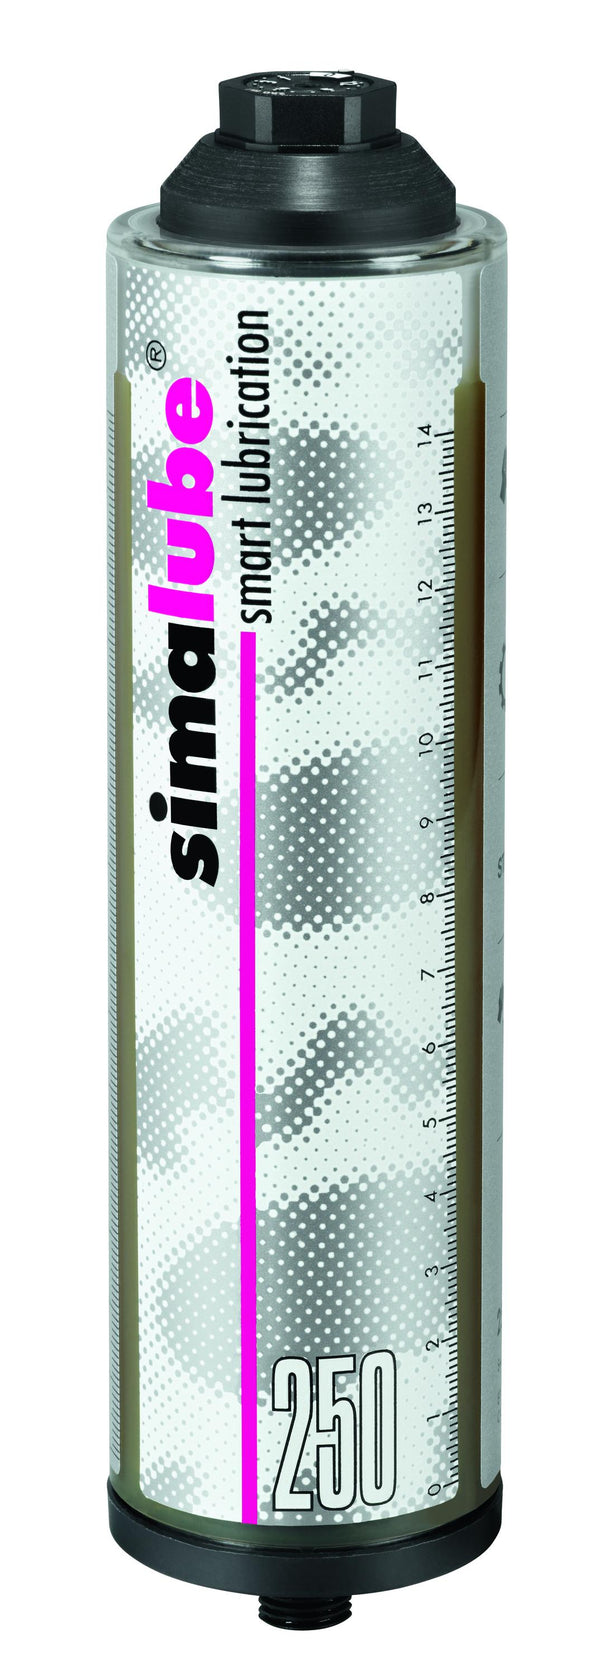 Simalube lubrication cartridge unfilled 250ml